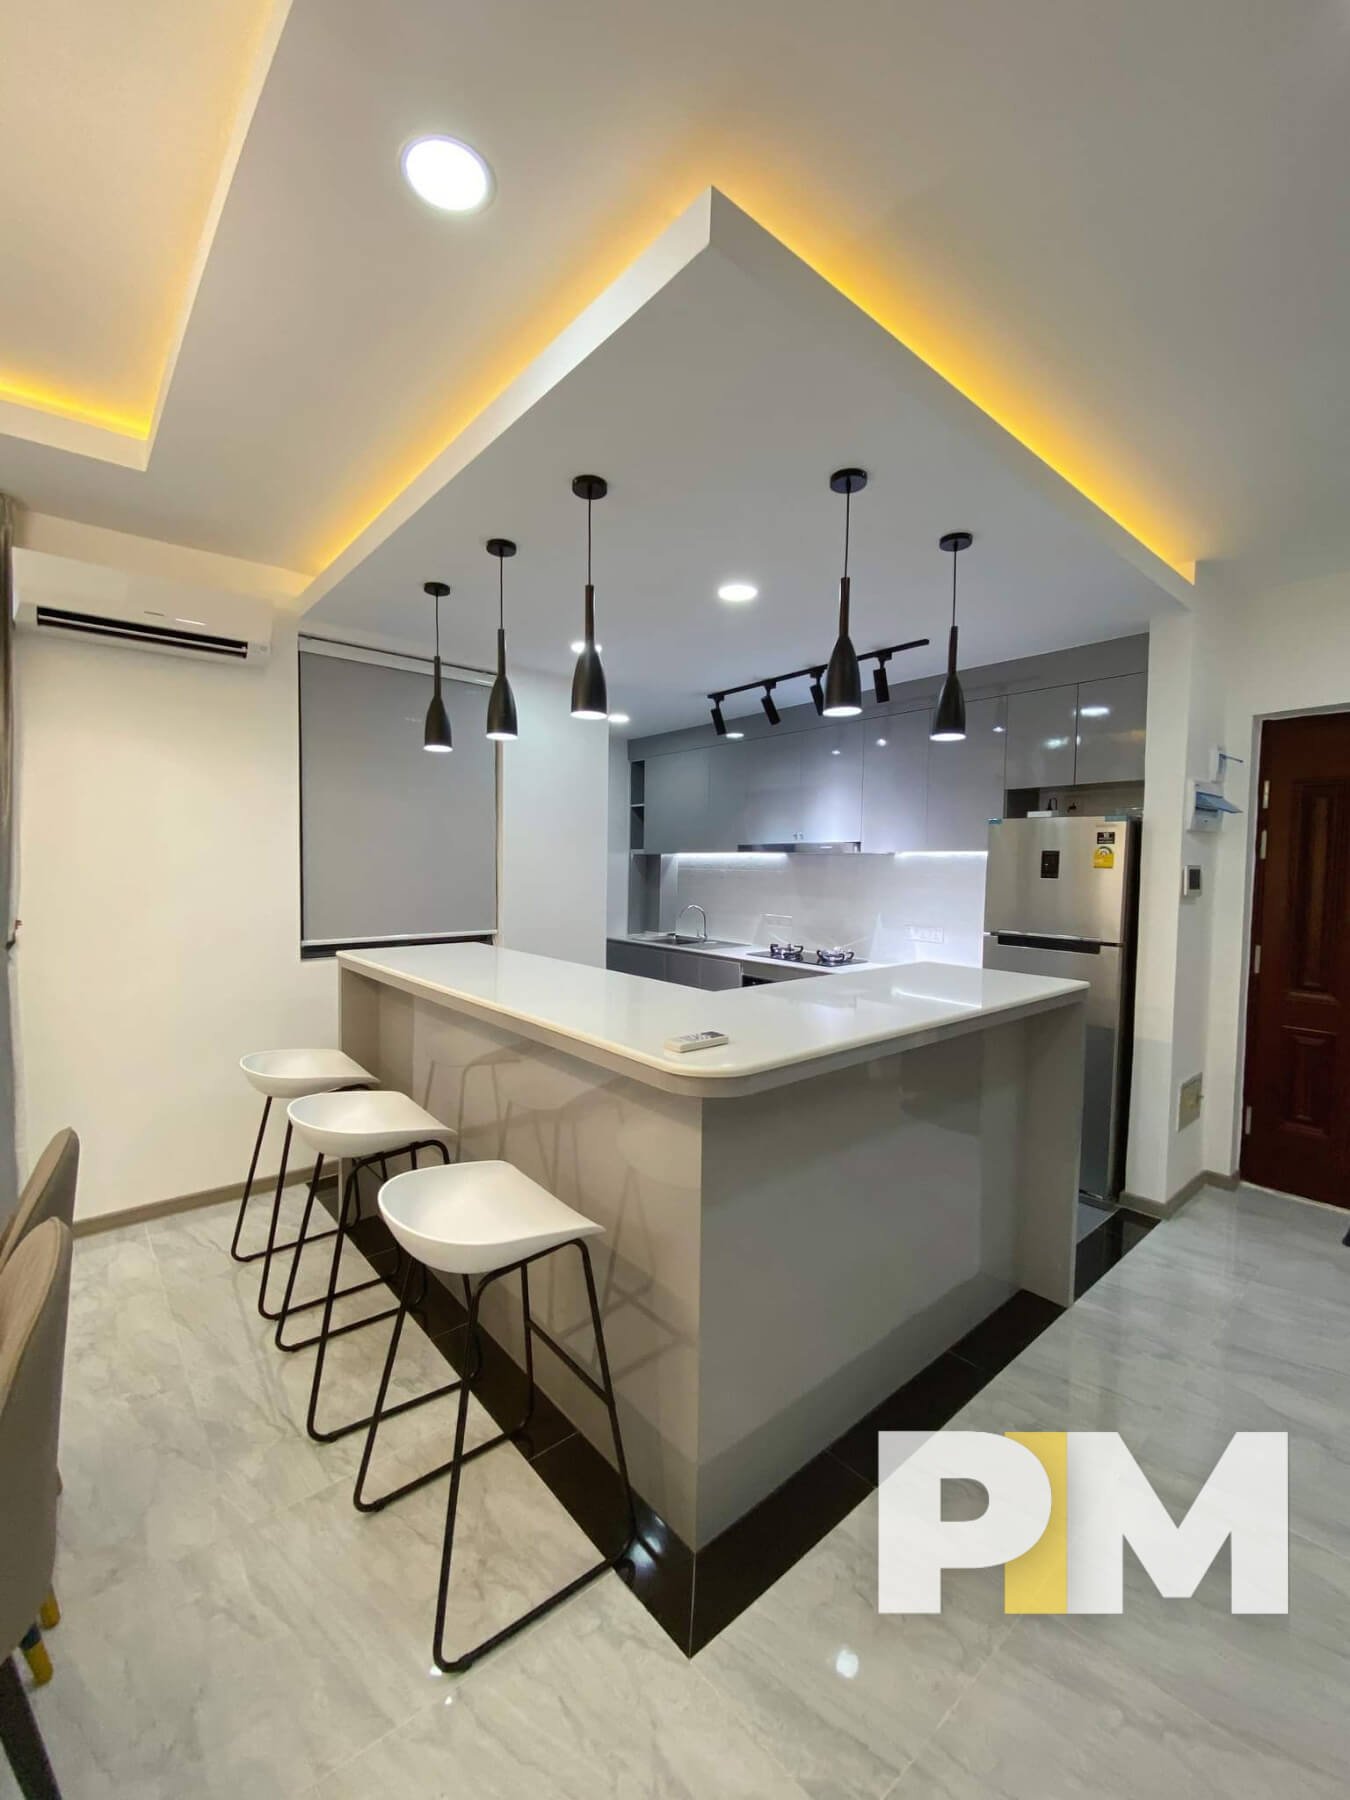 Kitchen room - Myanmar Real Estate